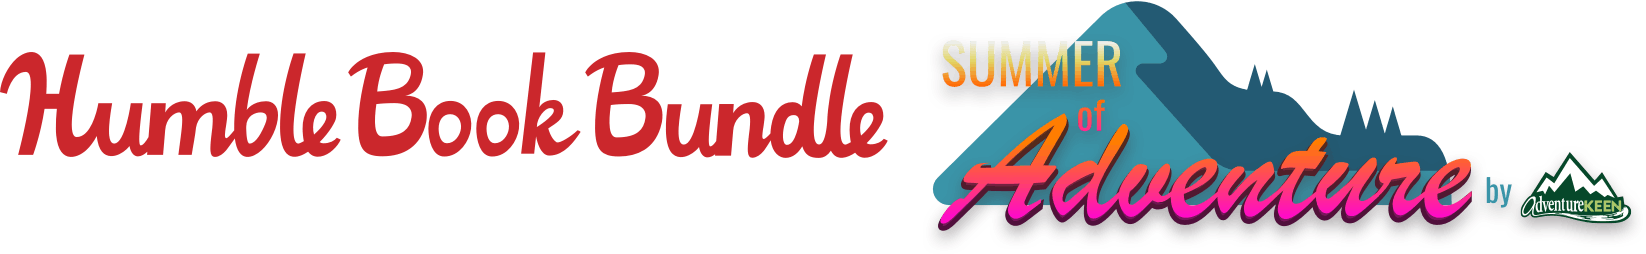 Humble Book Bundle: Summer of Adventure by AdventureKEEN